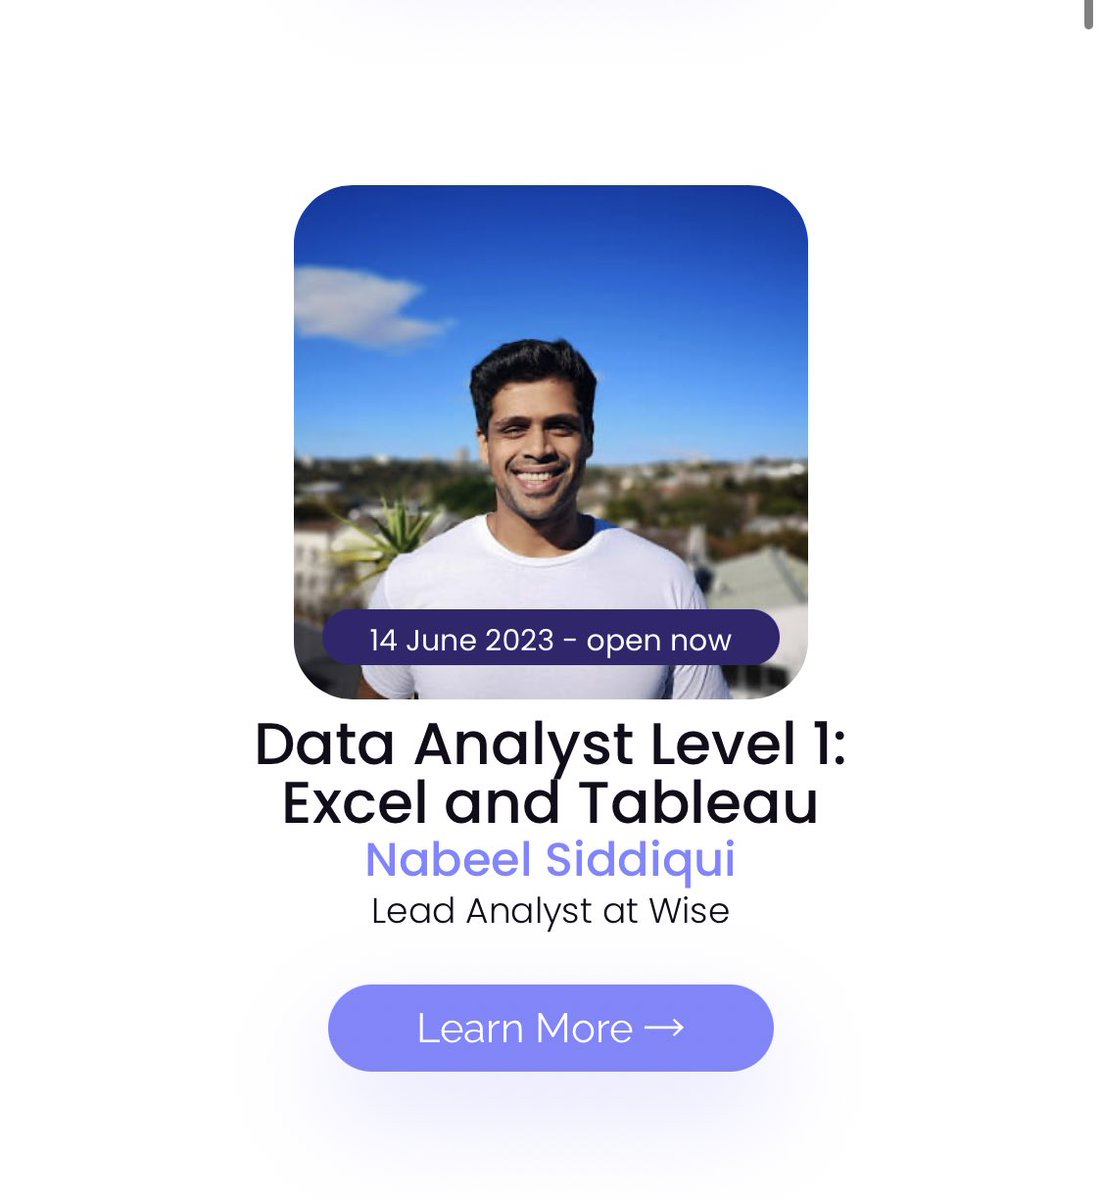 Data Analyst Level 1 (Excel and Tableau)

Apply here: entrylevel.net/experiences/da…

#datafam
#datacommunity